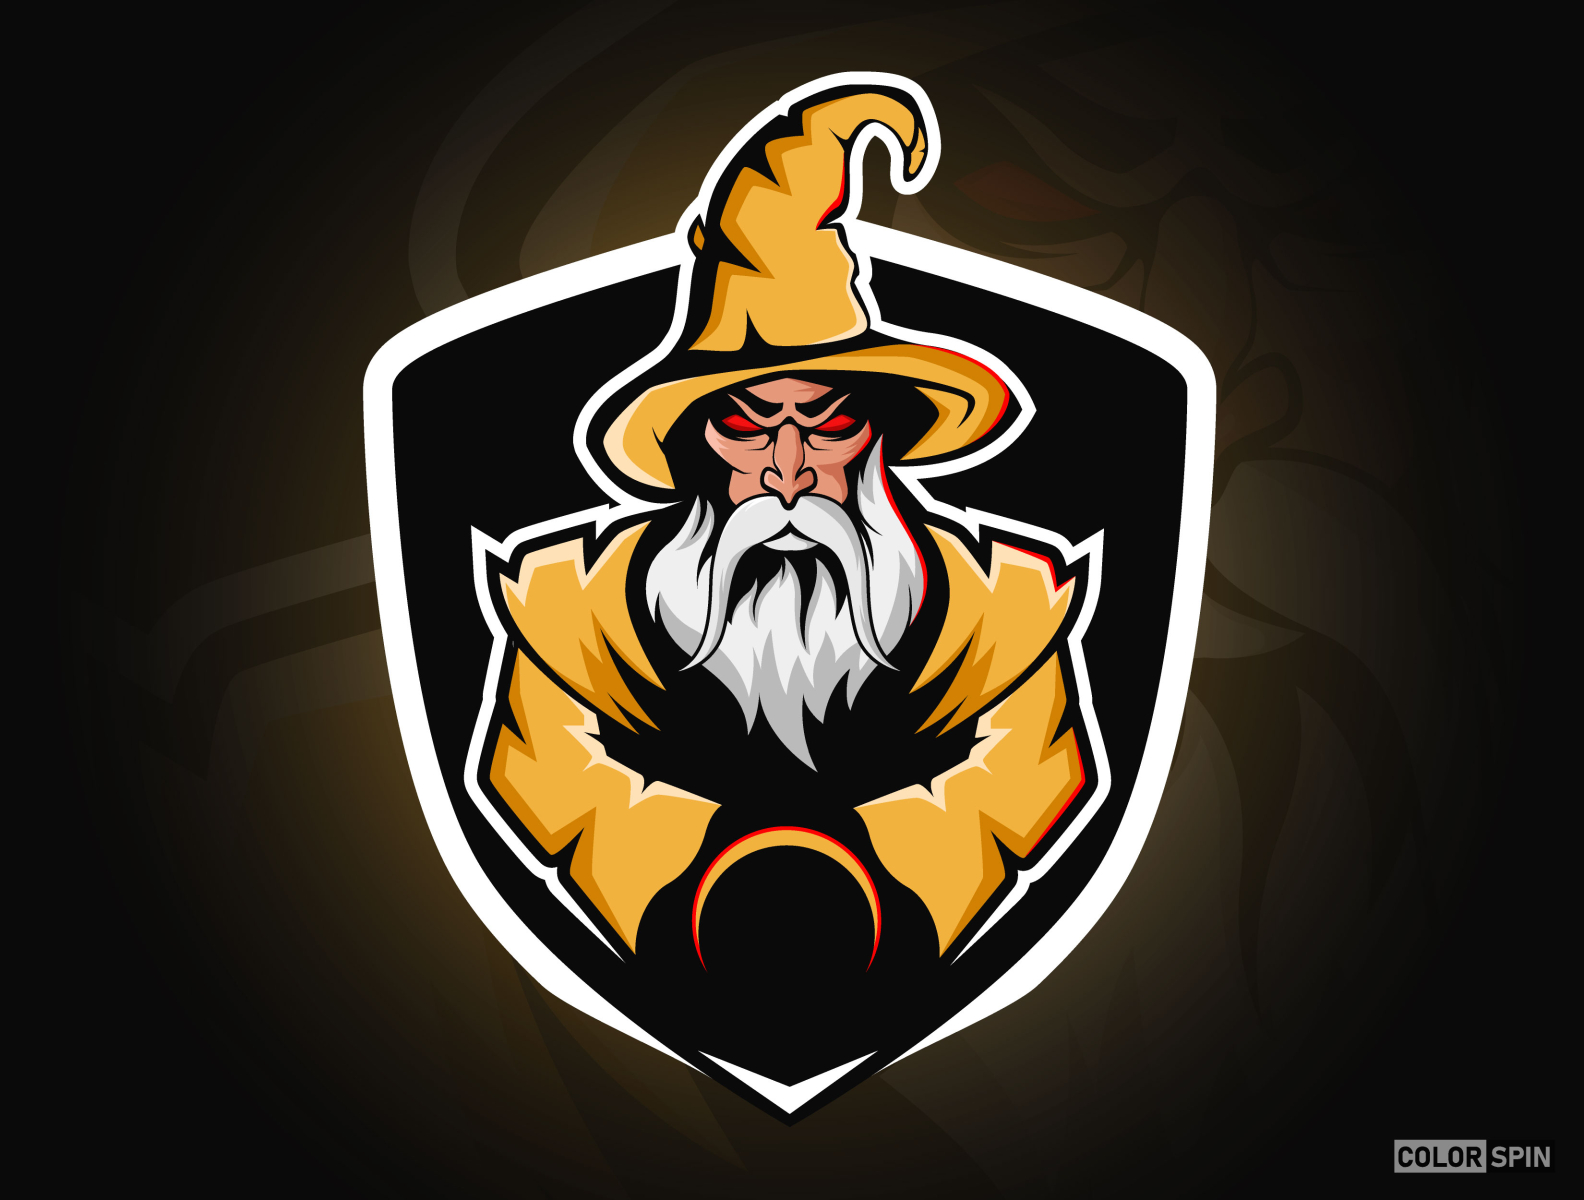 Share 152+ wizard logo latest - camera.edu.vn